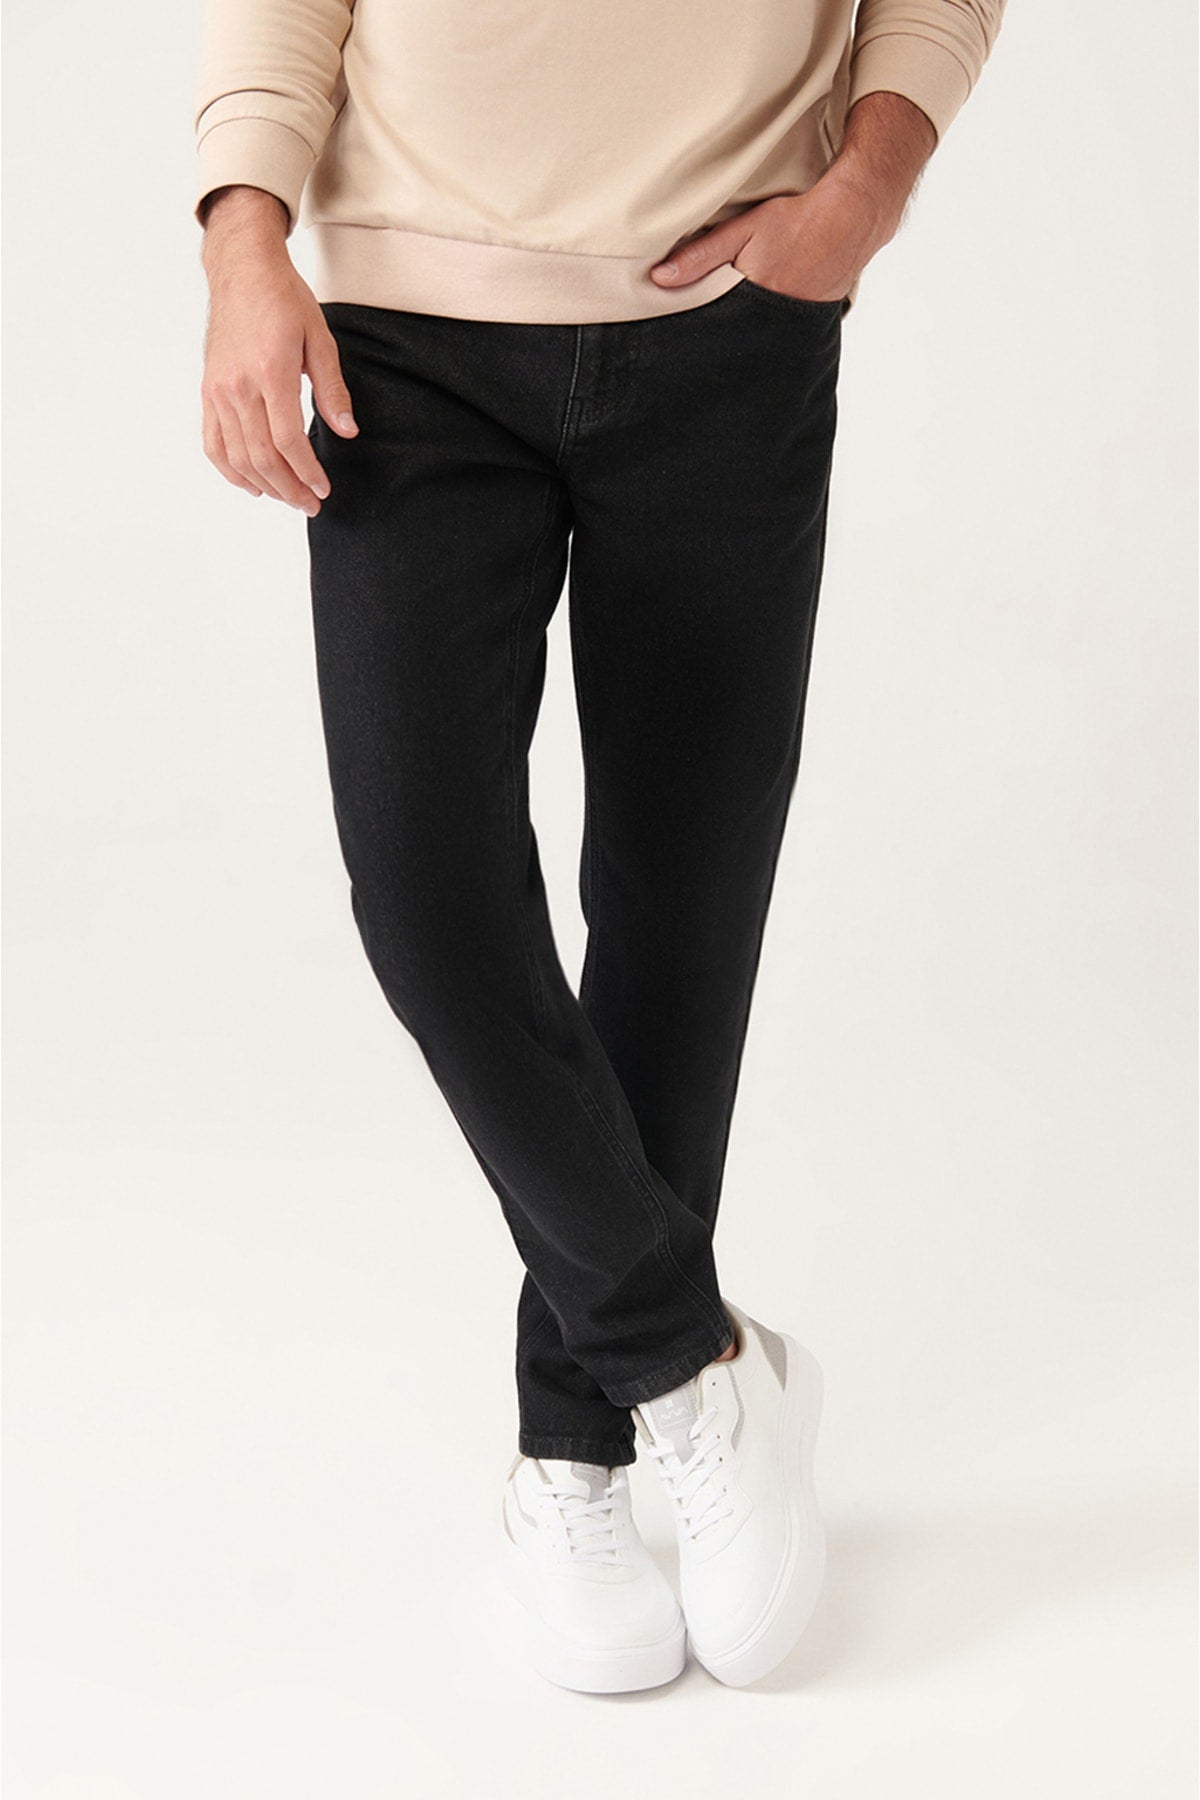 Men's black flat washing lycra jean pants A31y3502